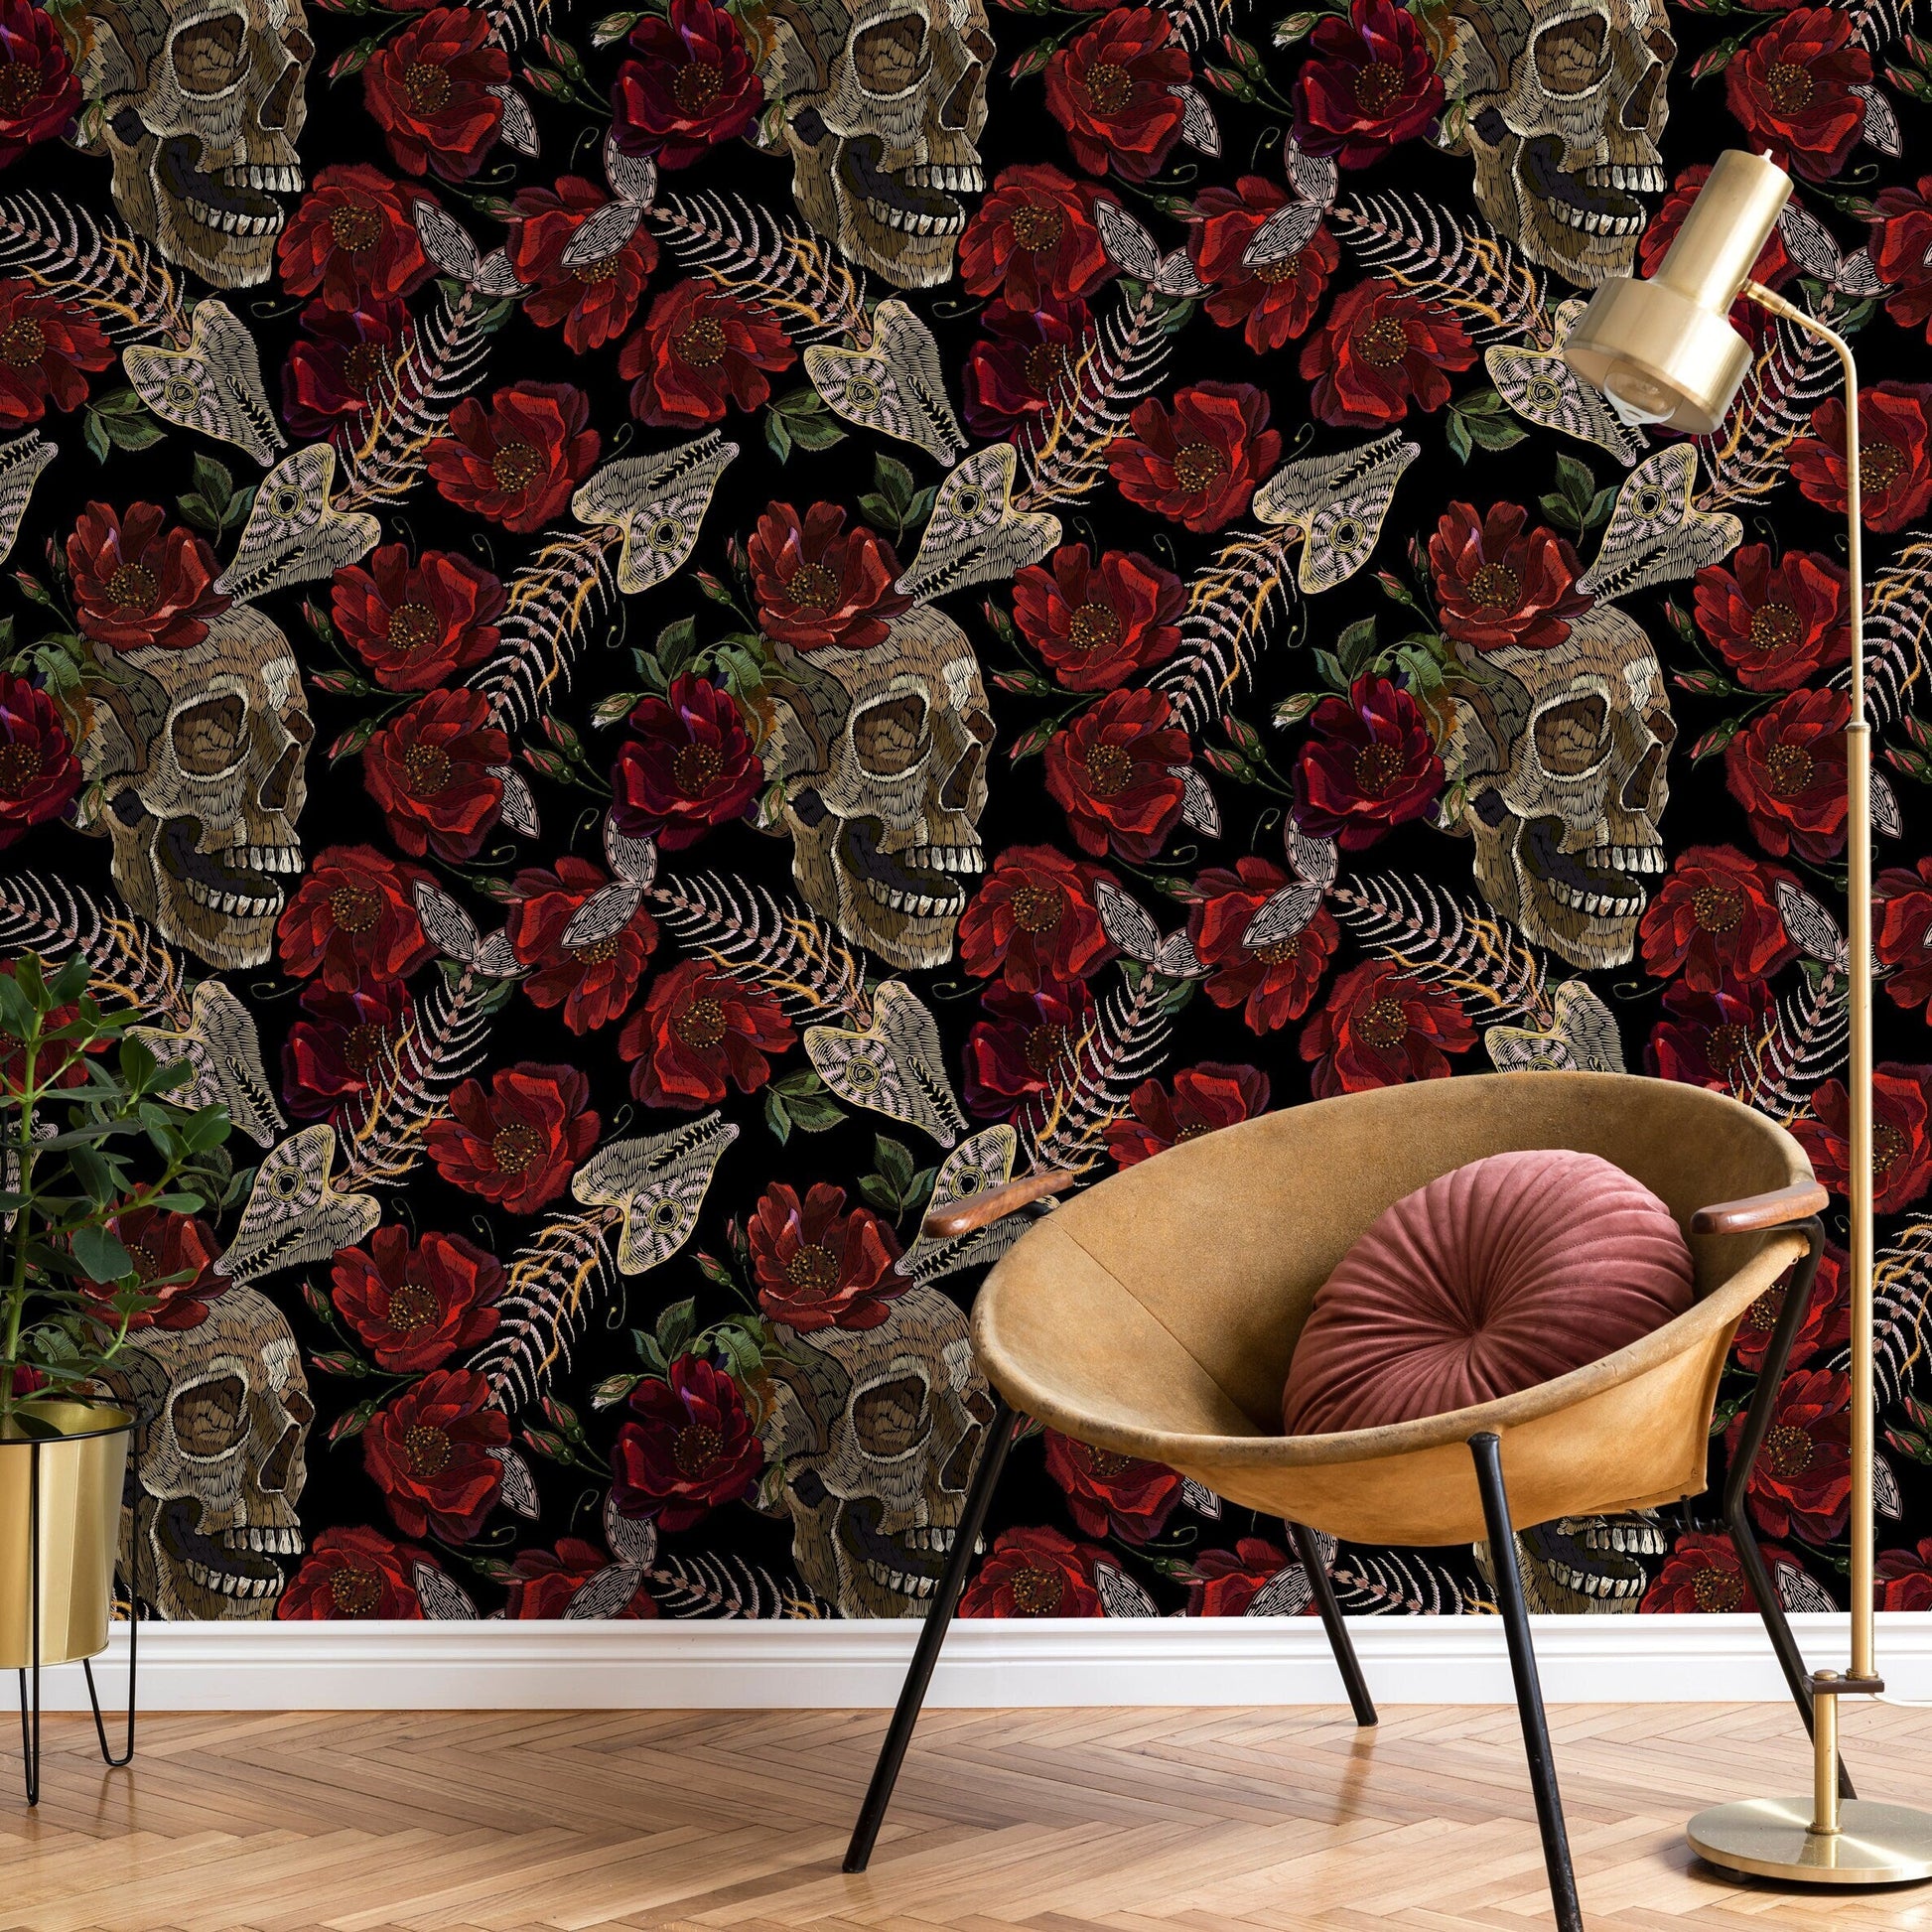 Dark Floral Wallpaper Fish Skeleton and Skull Wallpaper Peel and Stick and Traditional Wallpaper - D914